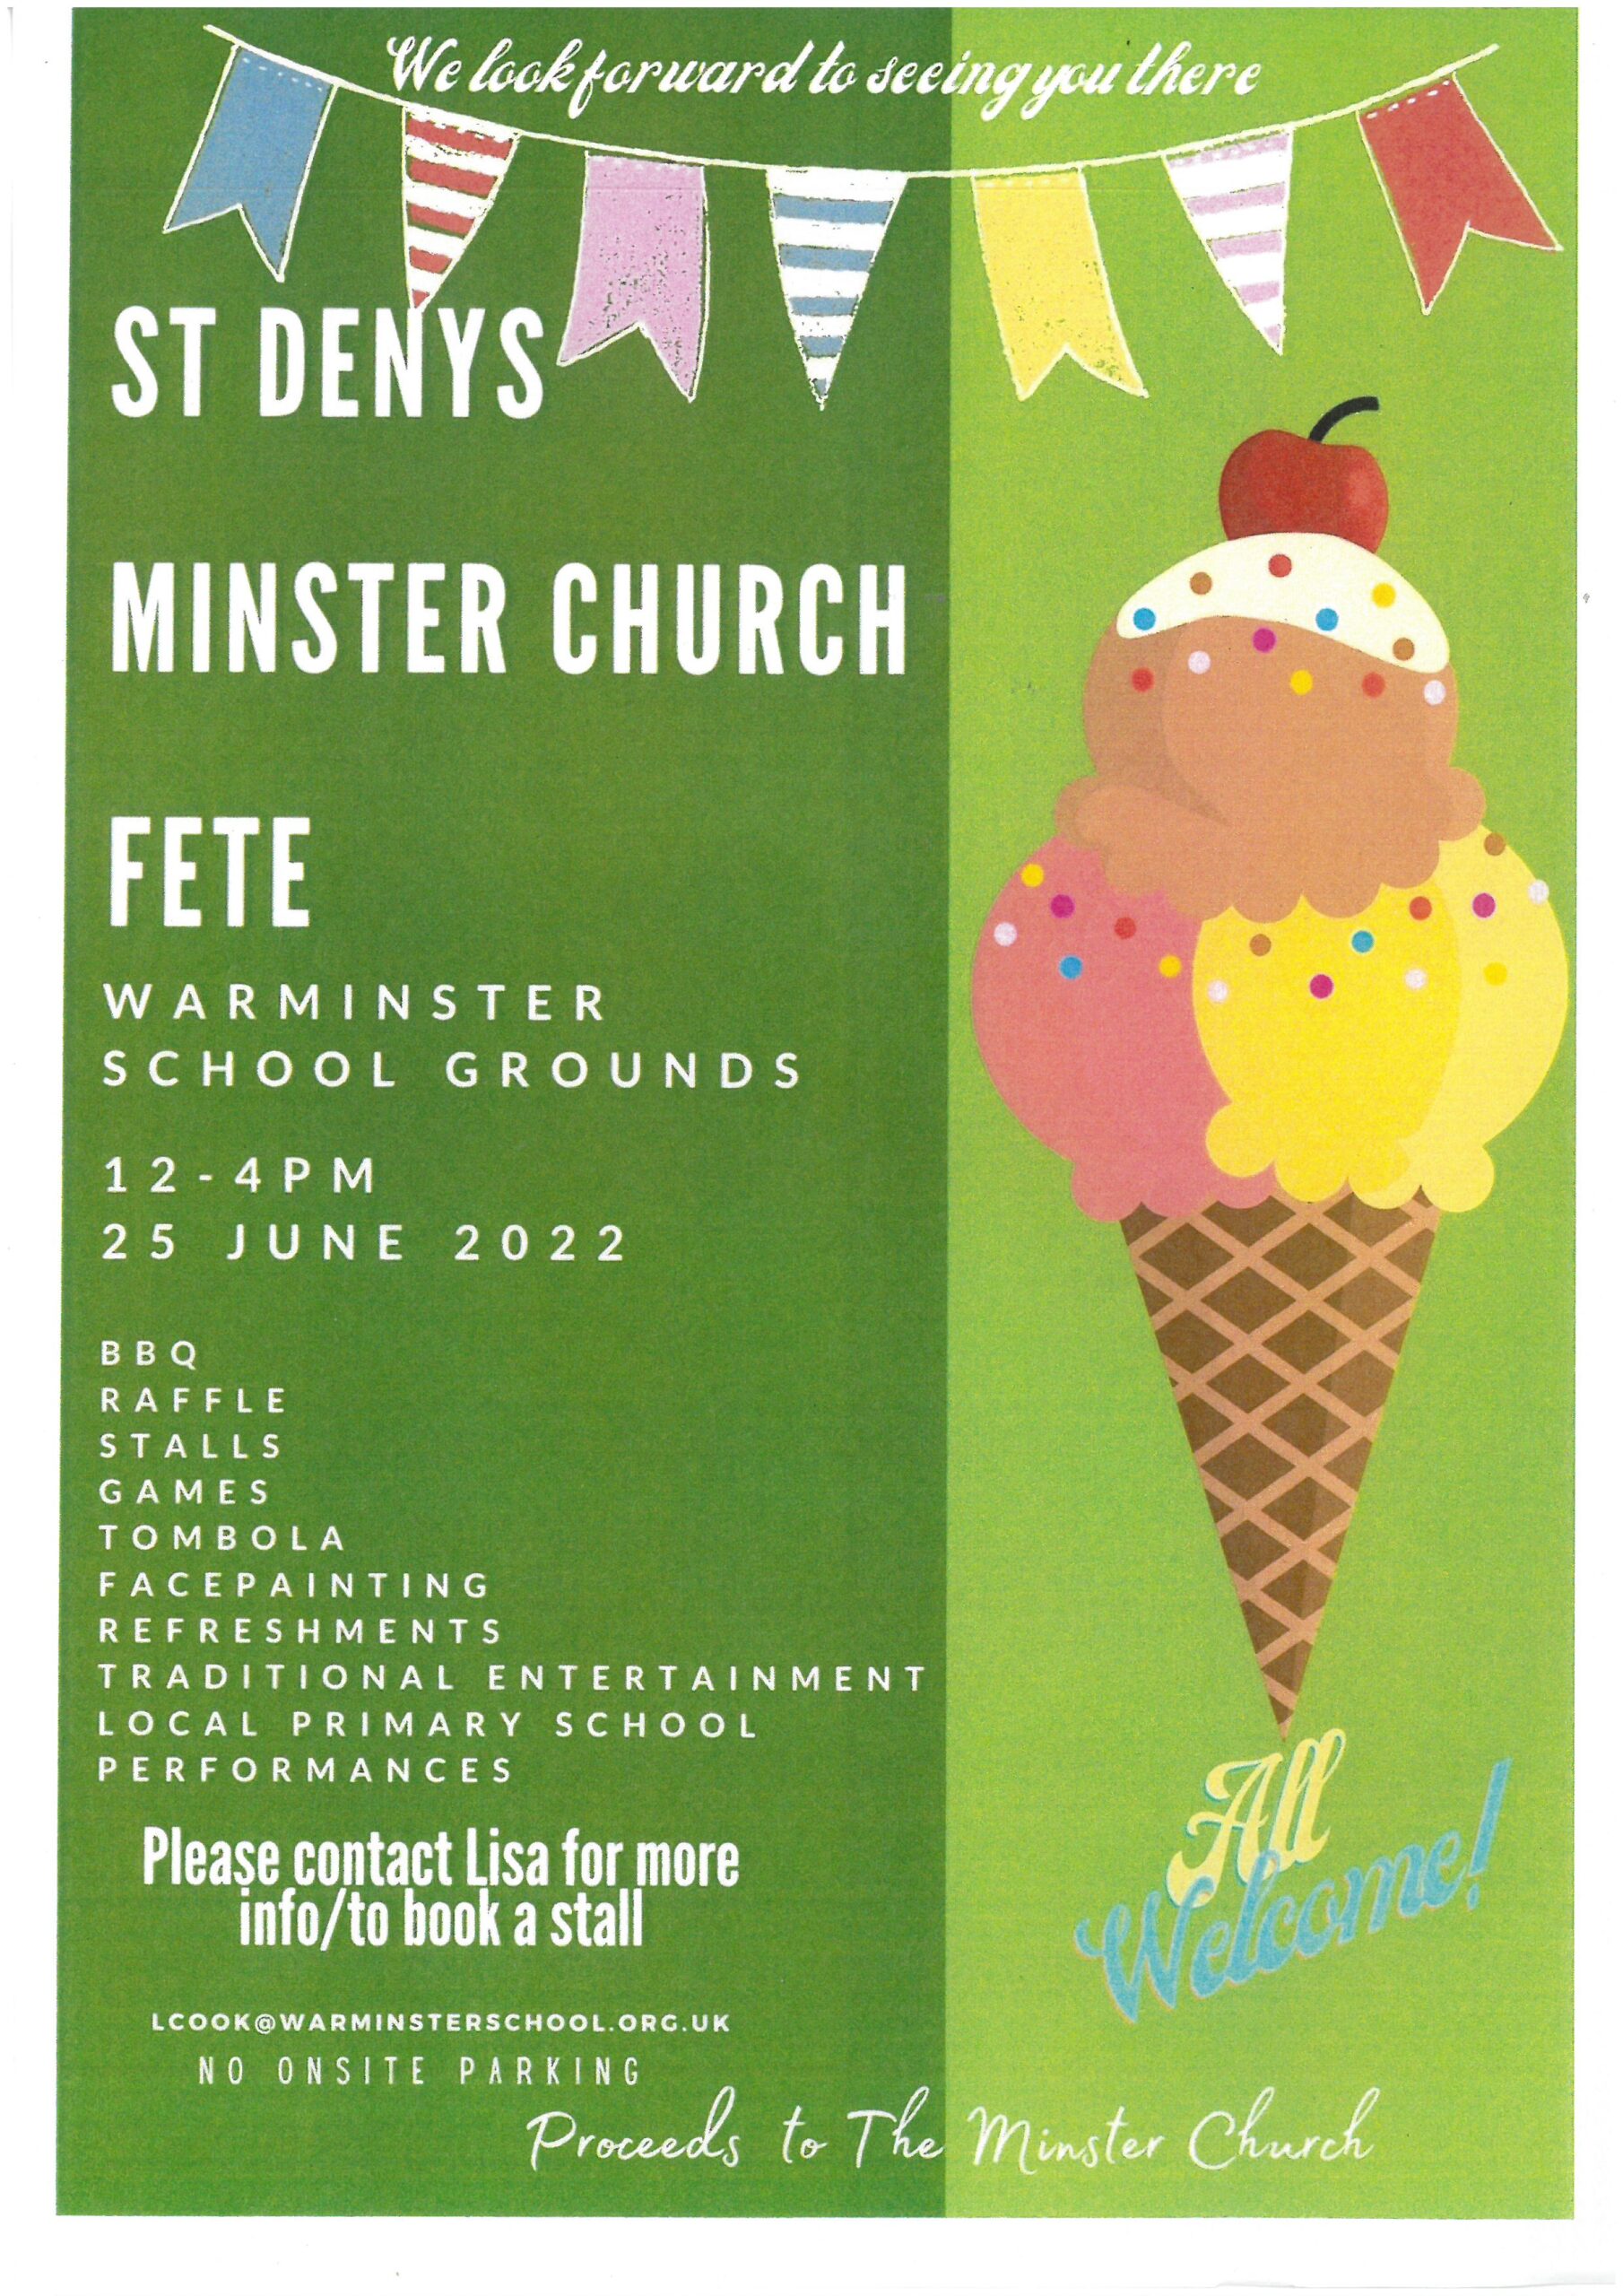 St Denys Minster Church Fete